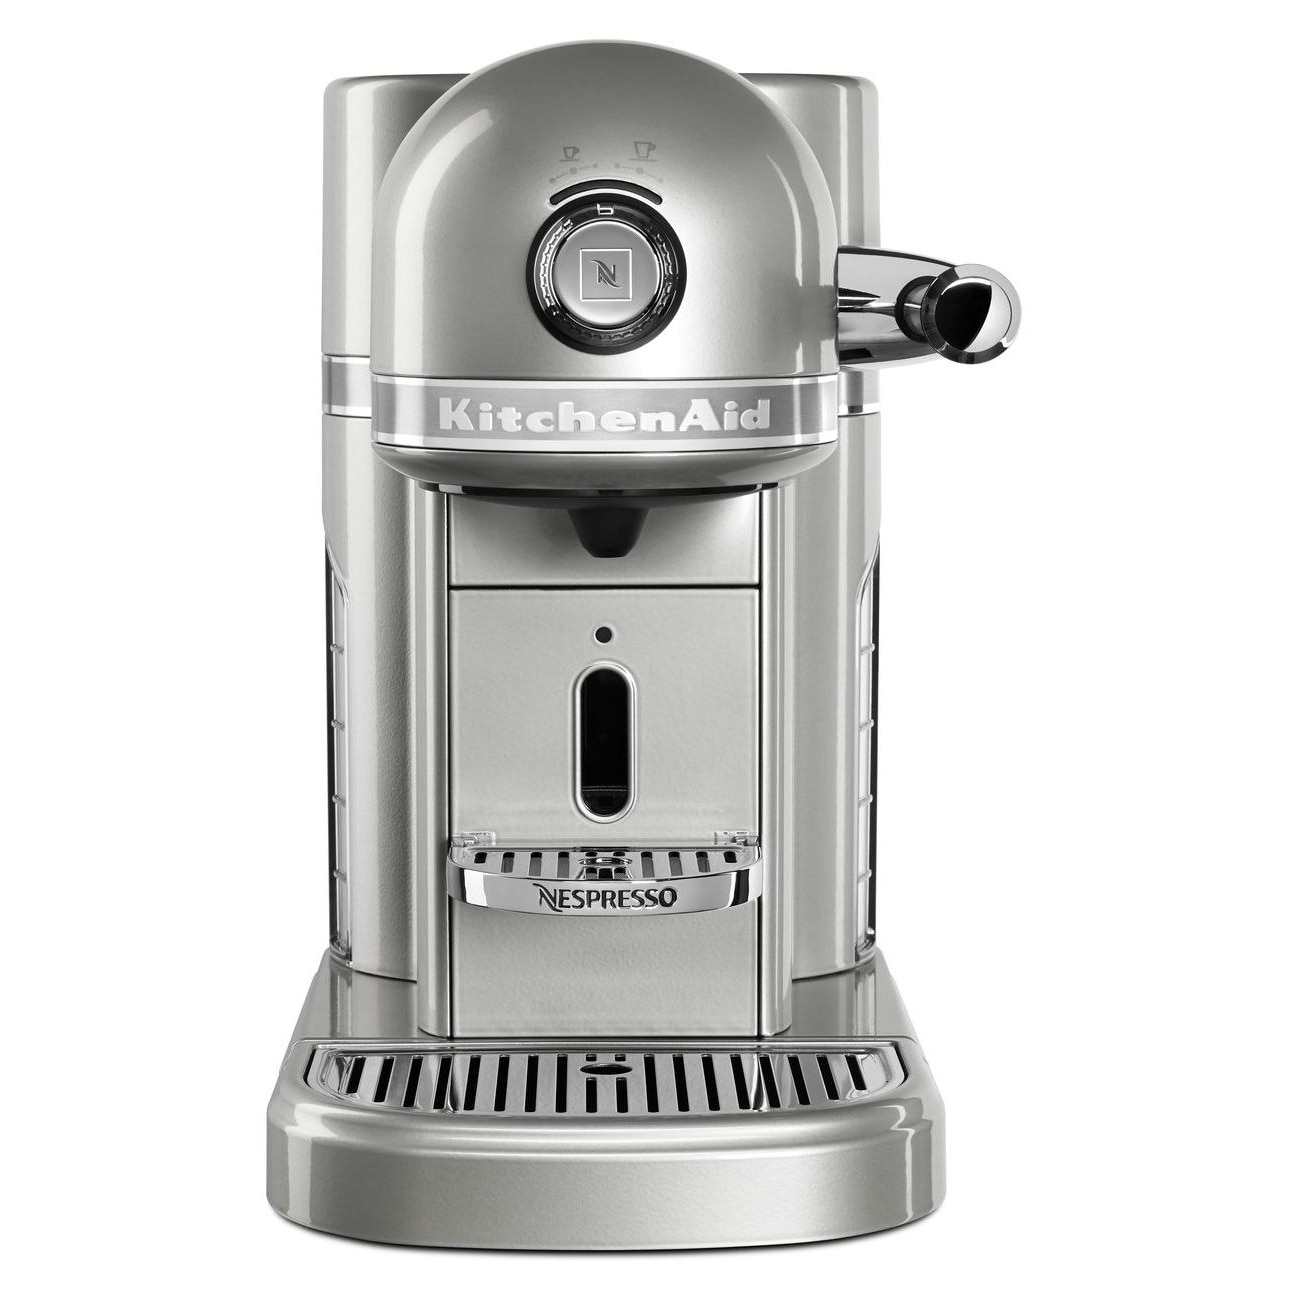 https://ak1.ostkcdn.com/images/products/9991901/Nespresso-by-KitchenAid-KES0503-Metal-Espresso-Machine-90b75a29-f1de-499f-9ec8-100b4808bf9f.jpg